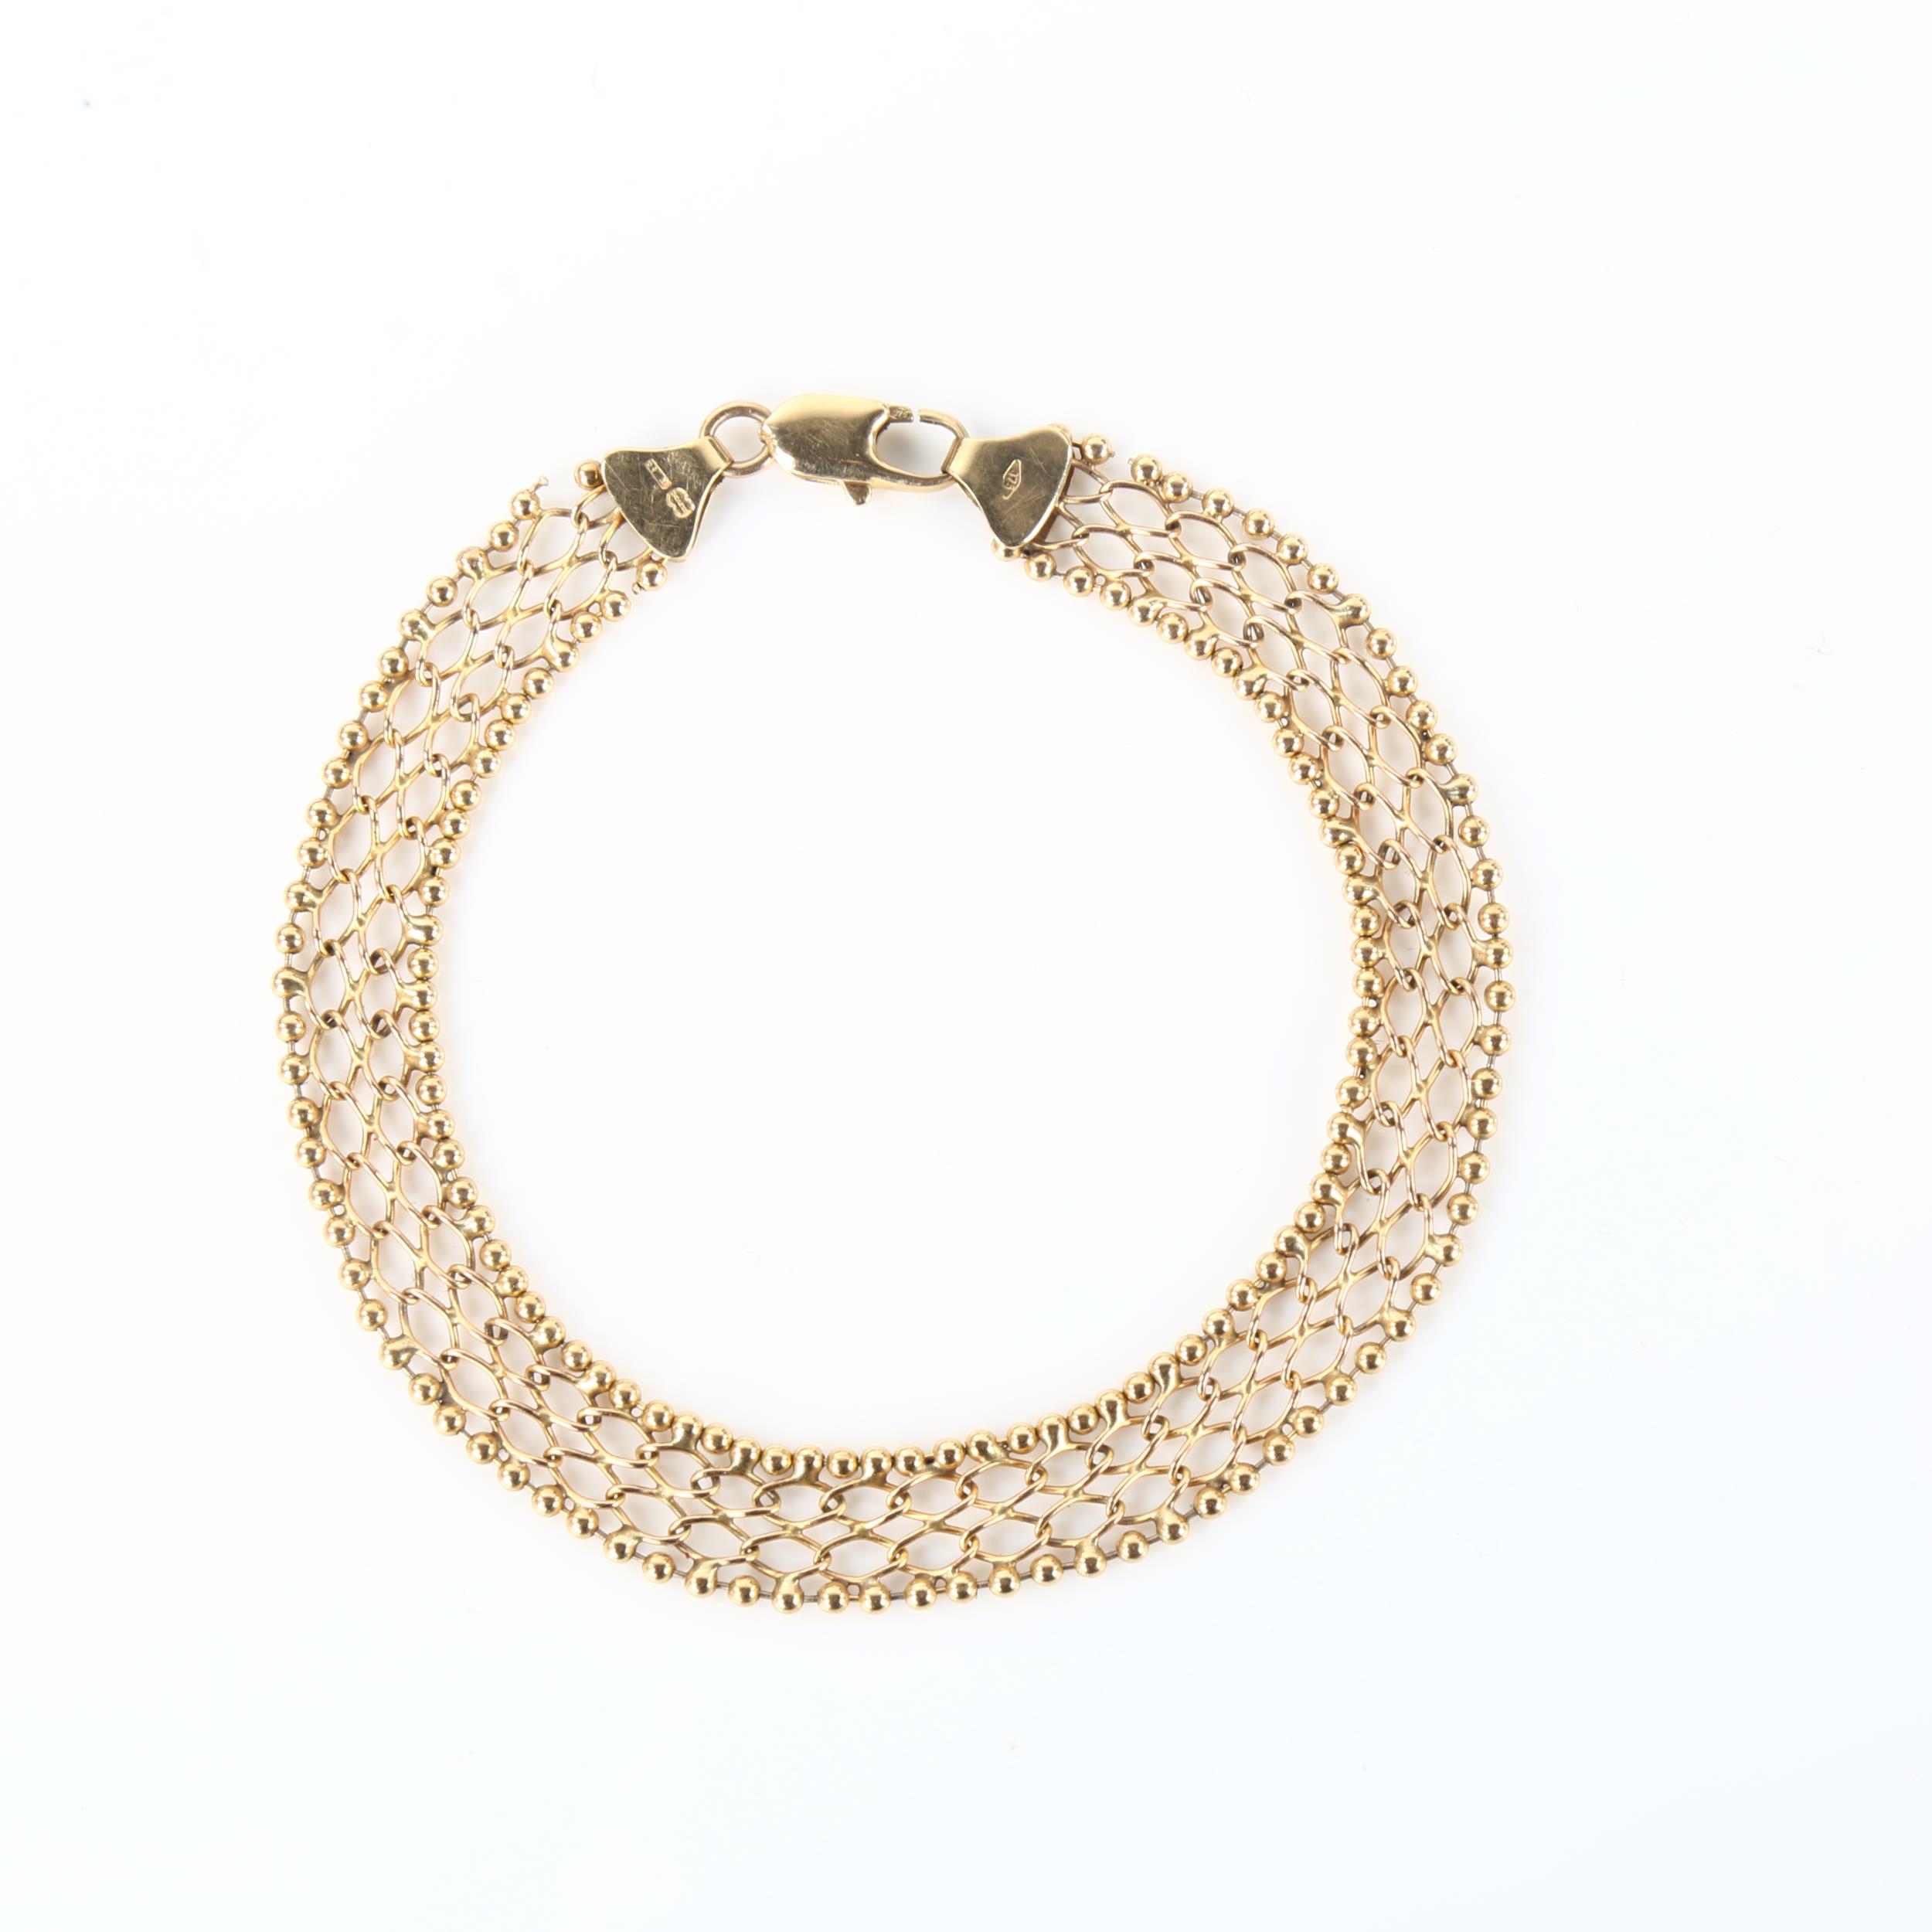 UNOAERRE - a 9ct gold lattice bracelet, length 19cm, 5.7g No damage or repairs, no broken links, - Image 2 of 4